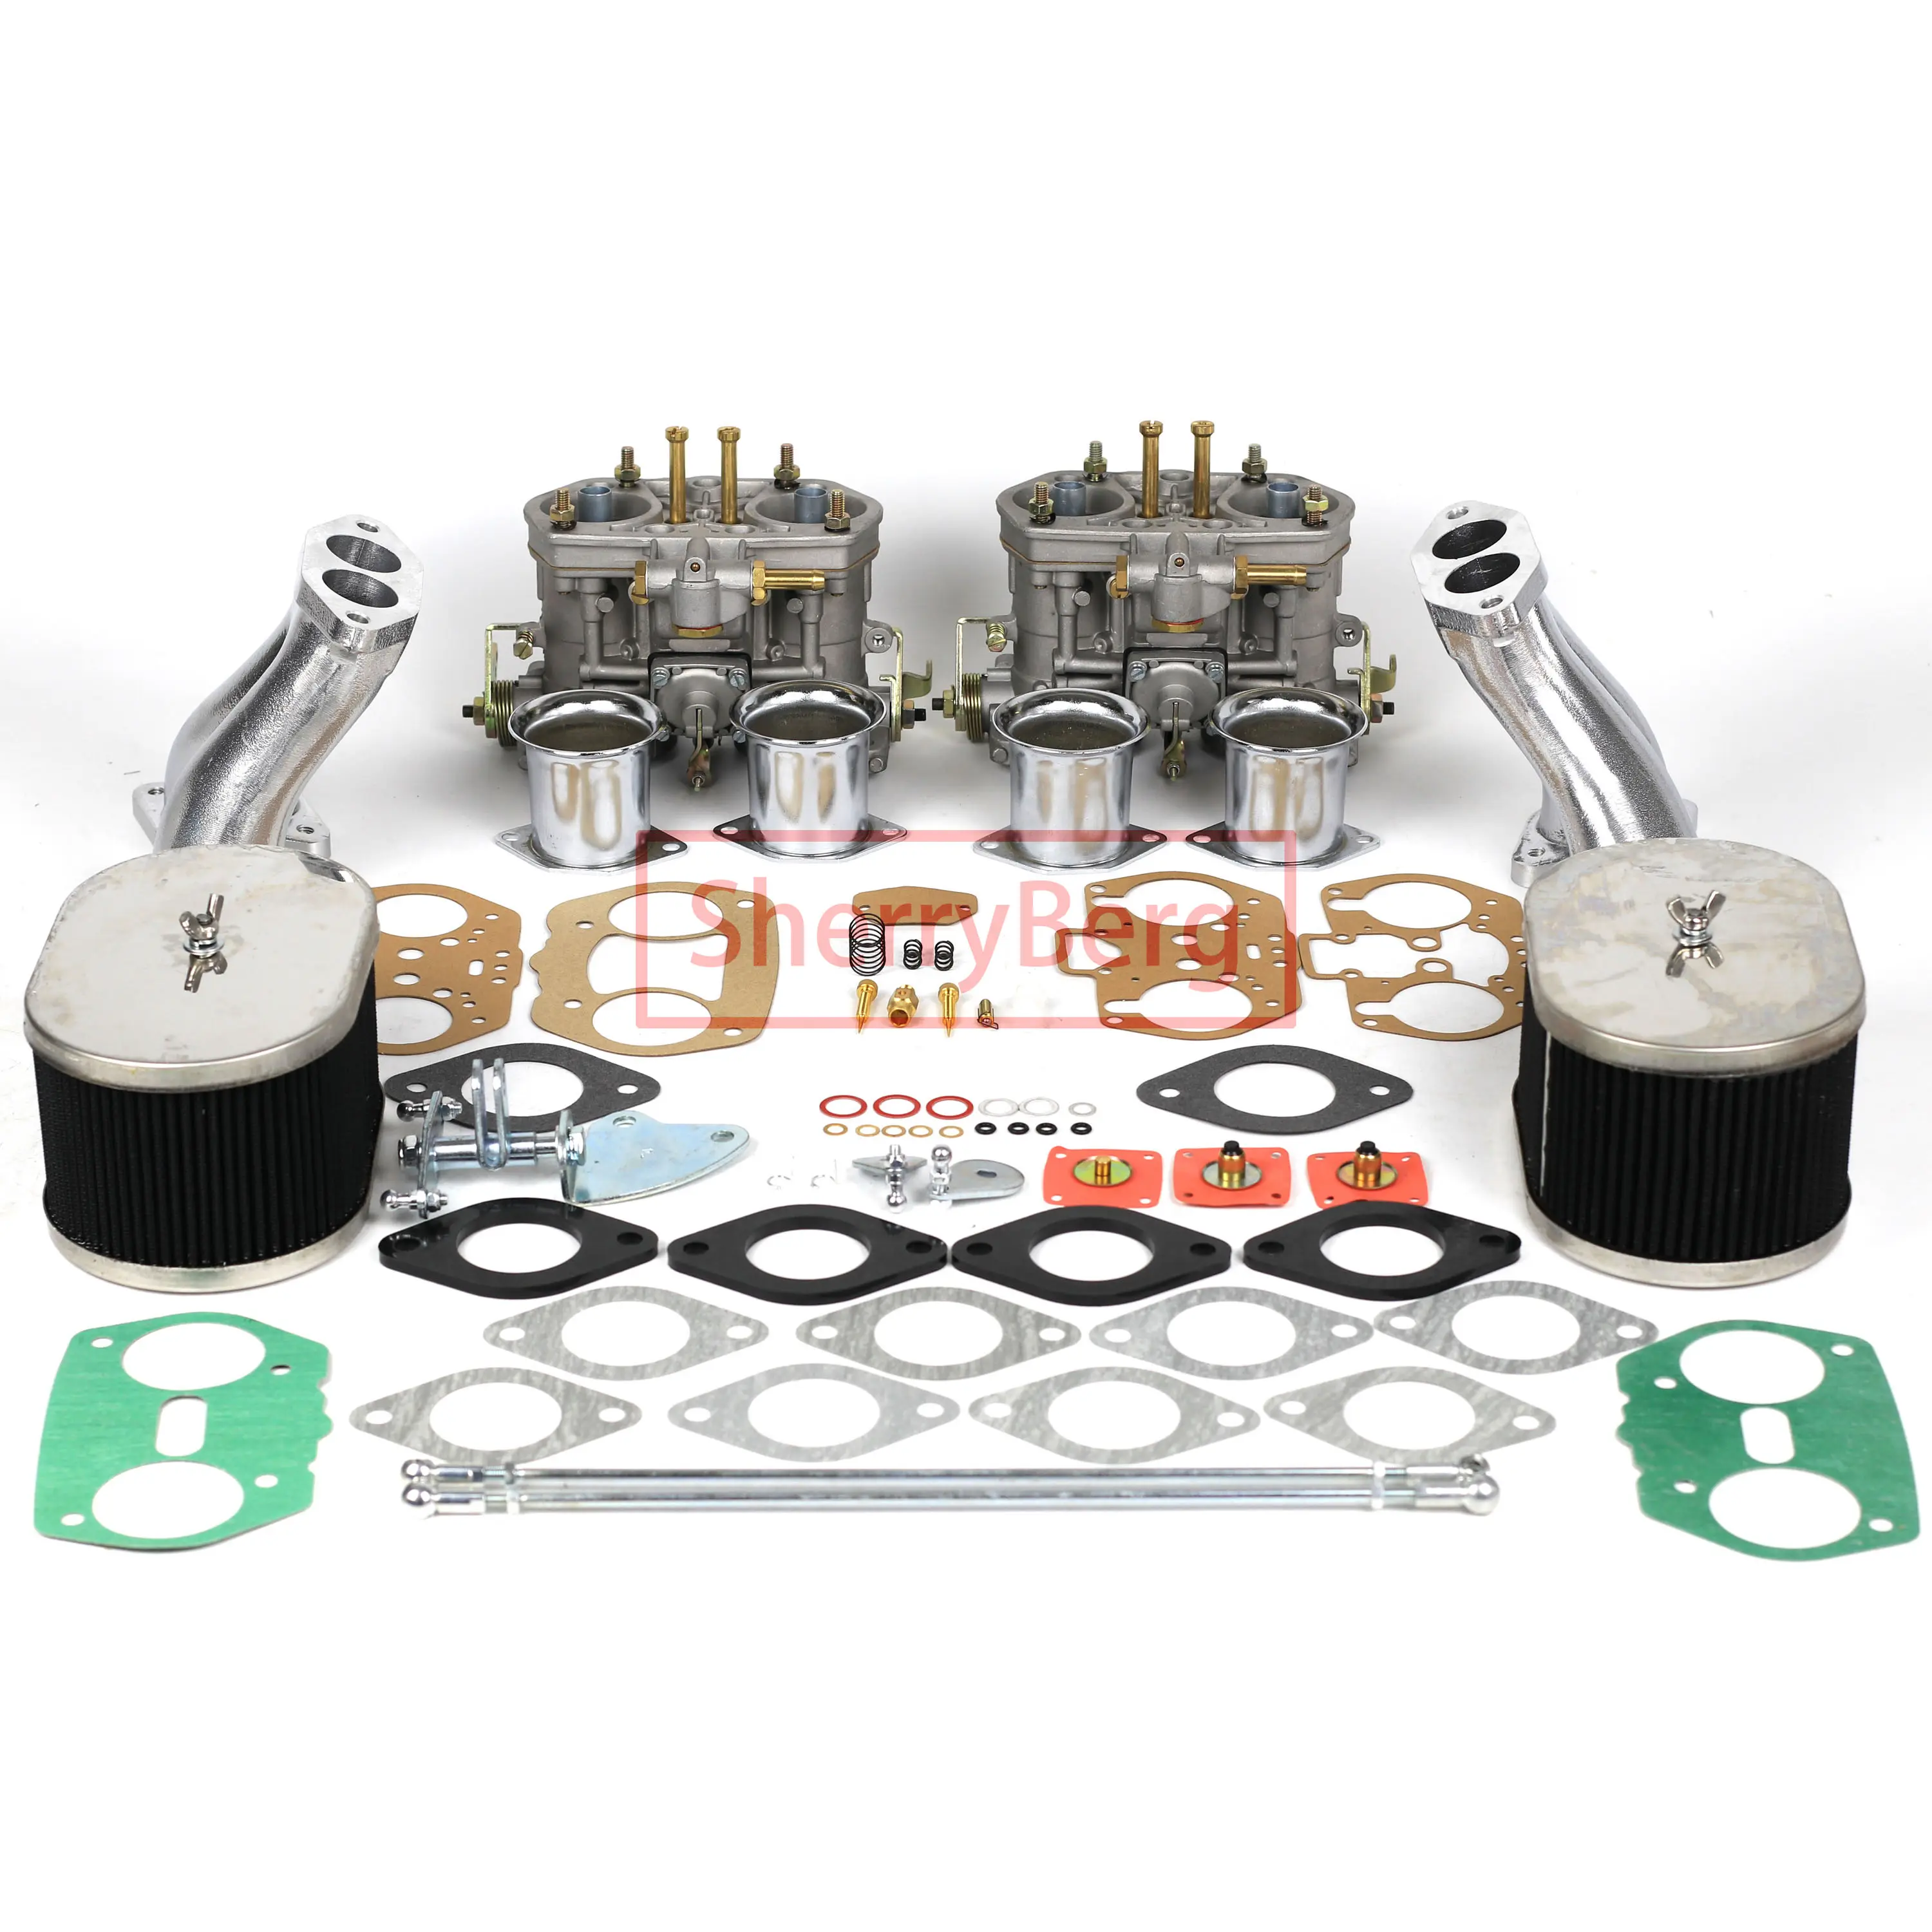 SherryBerg-kit de conversión de carburador para VW tipo 4 WEBER DUAL T 8 44mm, KIT de carburador de enlace alto 44 IDF